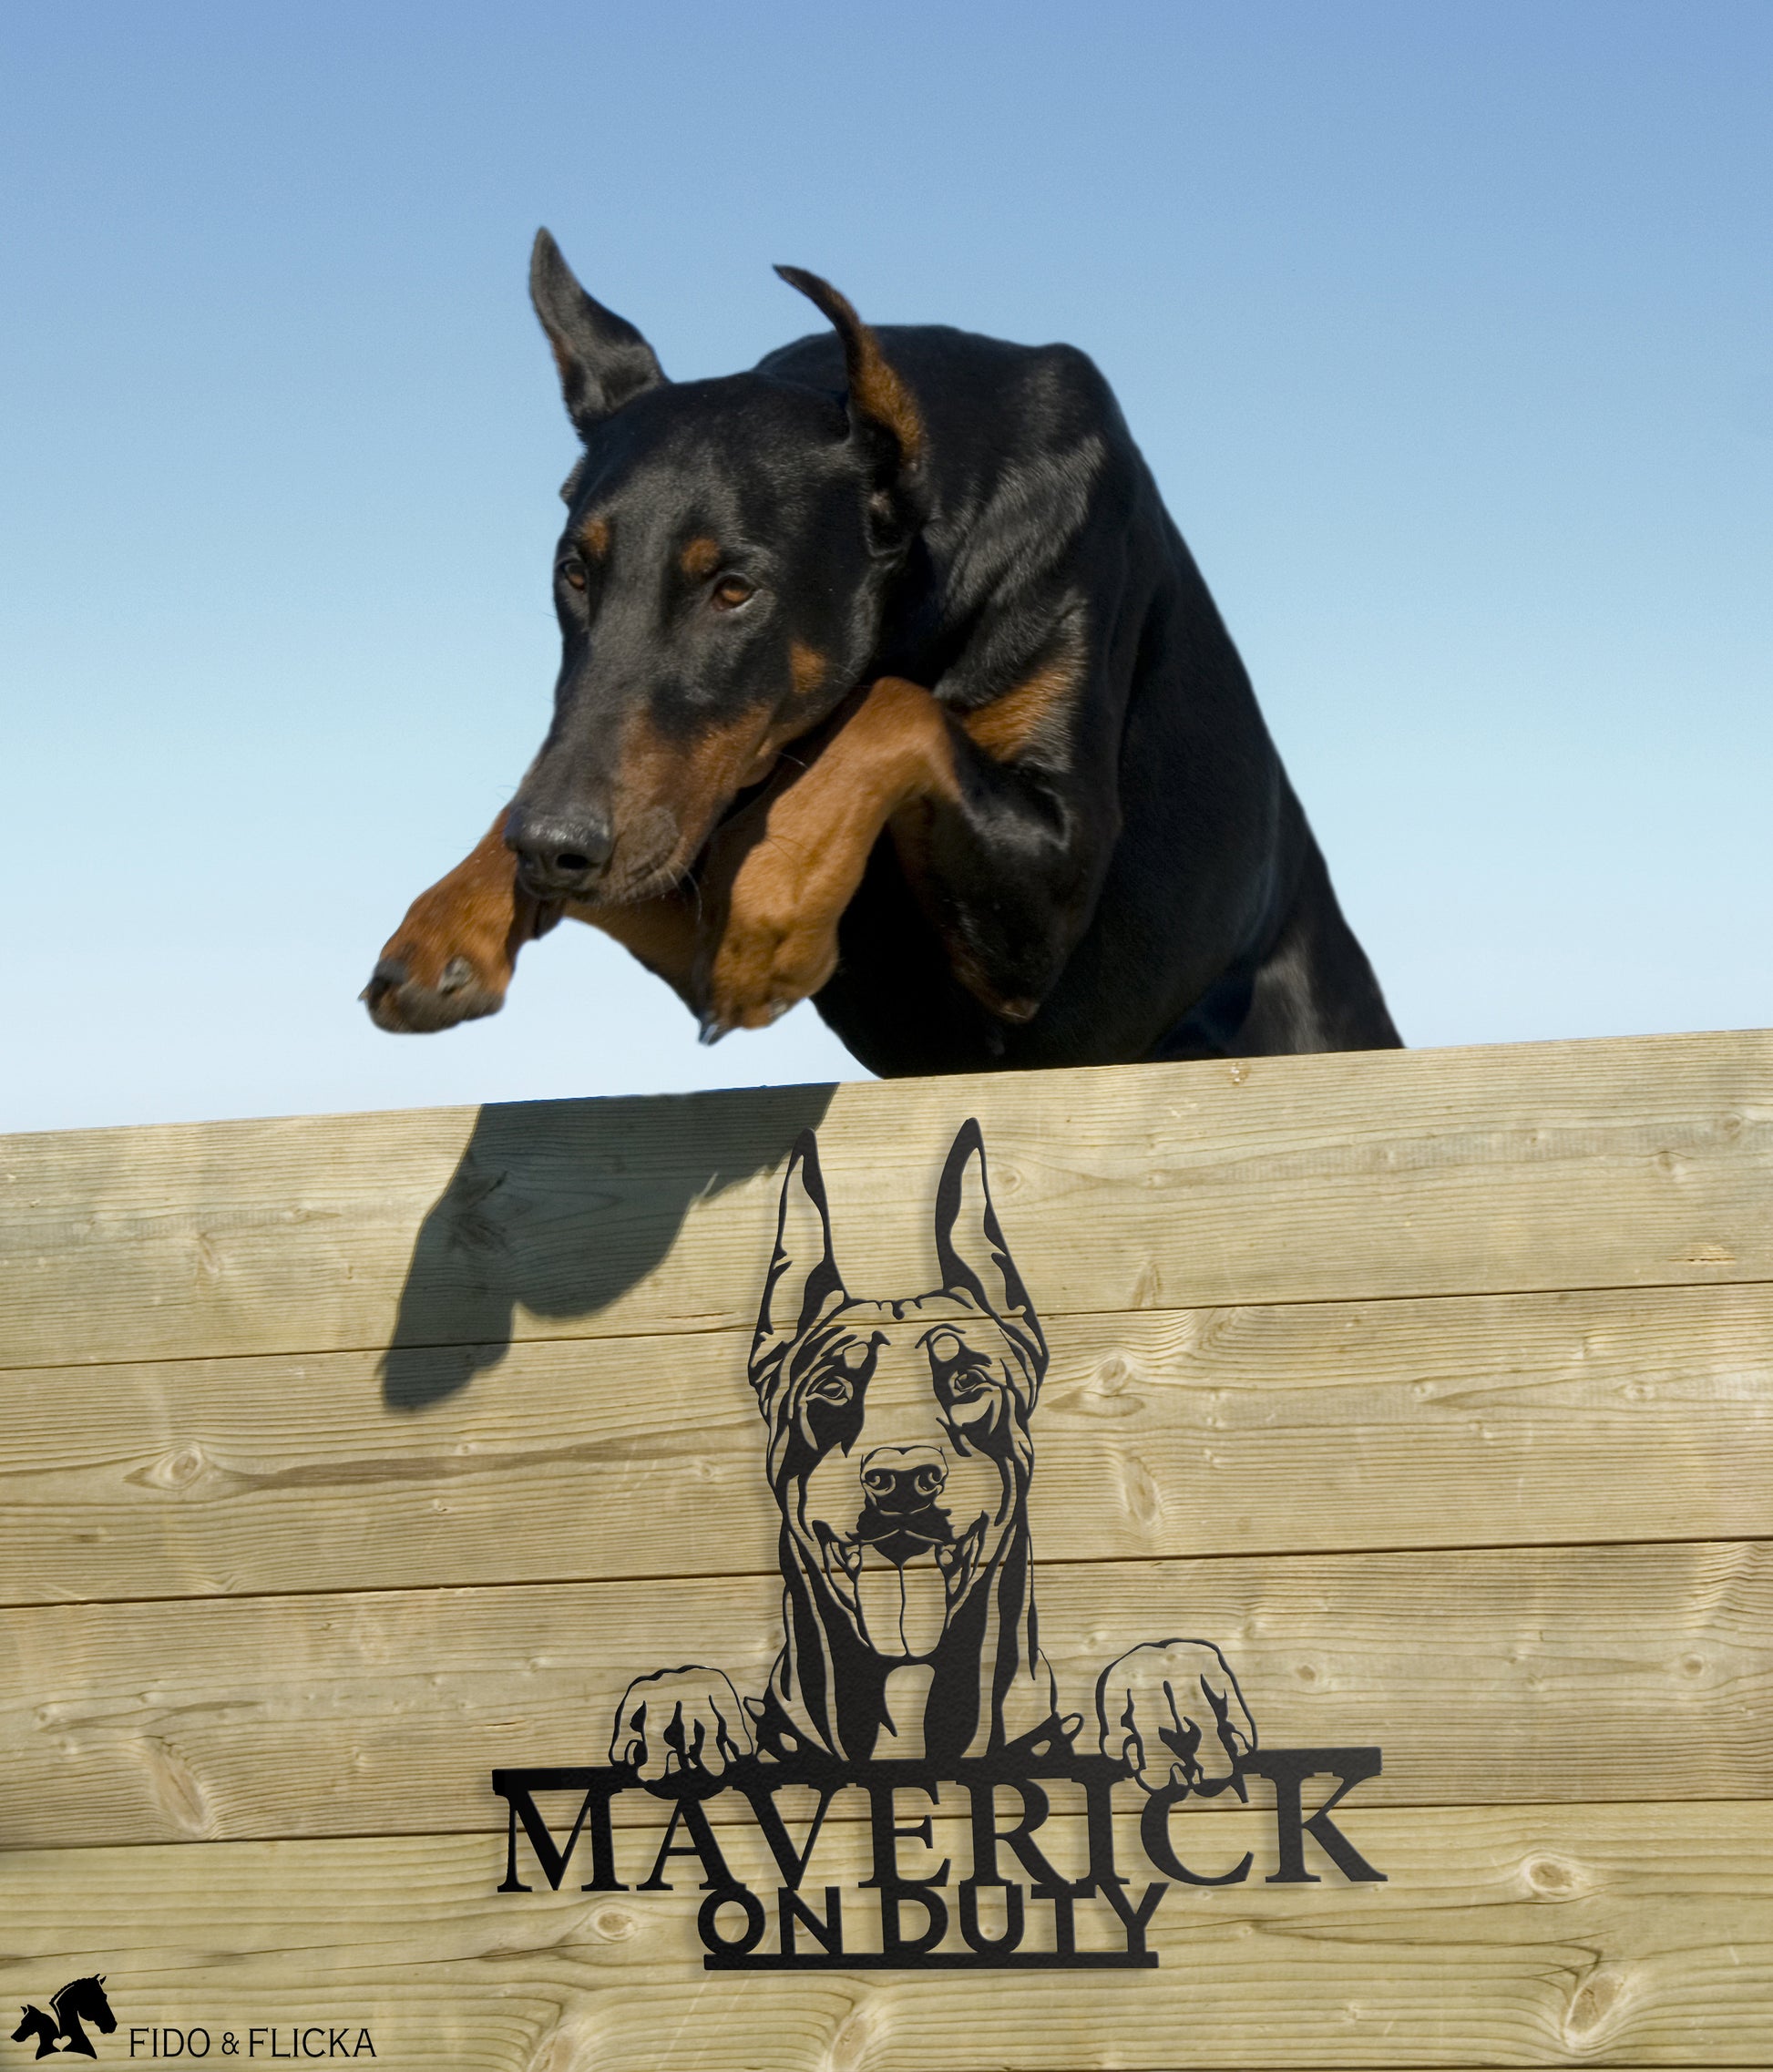 Maverick the doberman on duty with doberman jumping fence